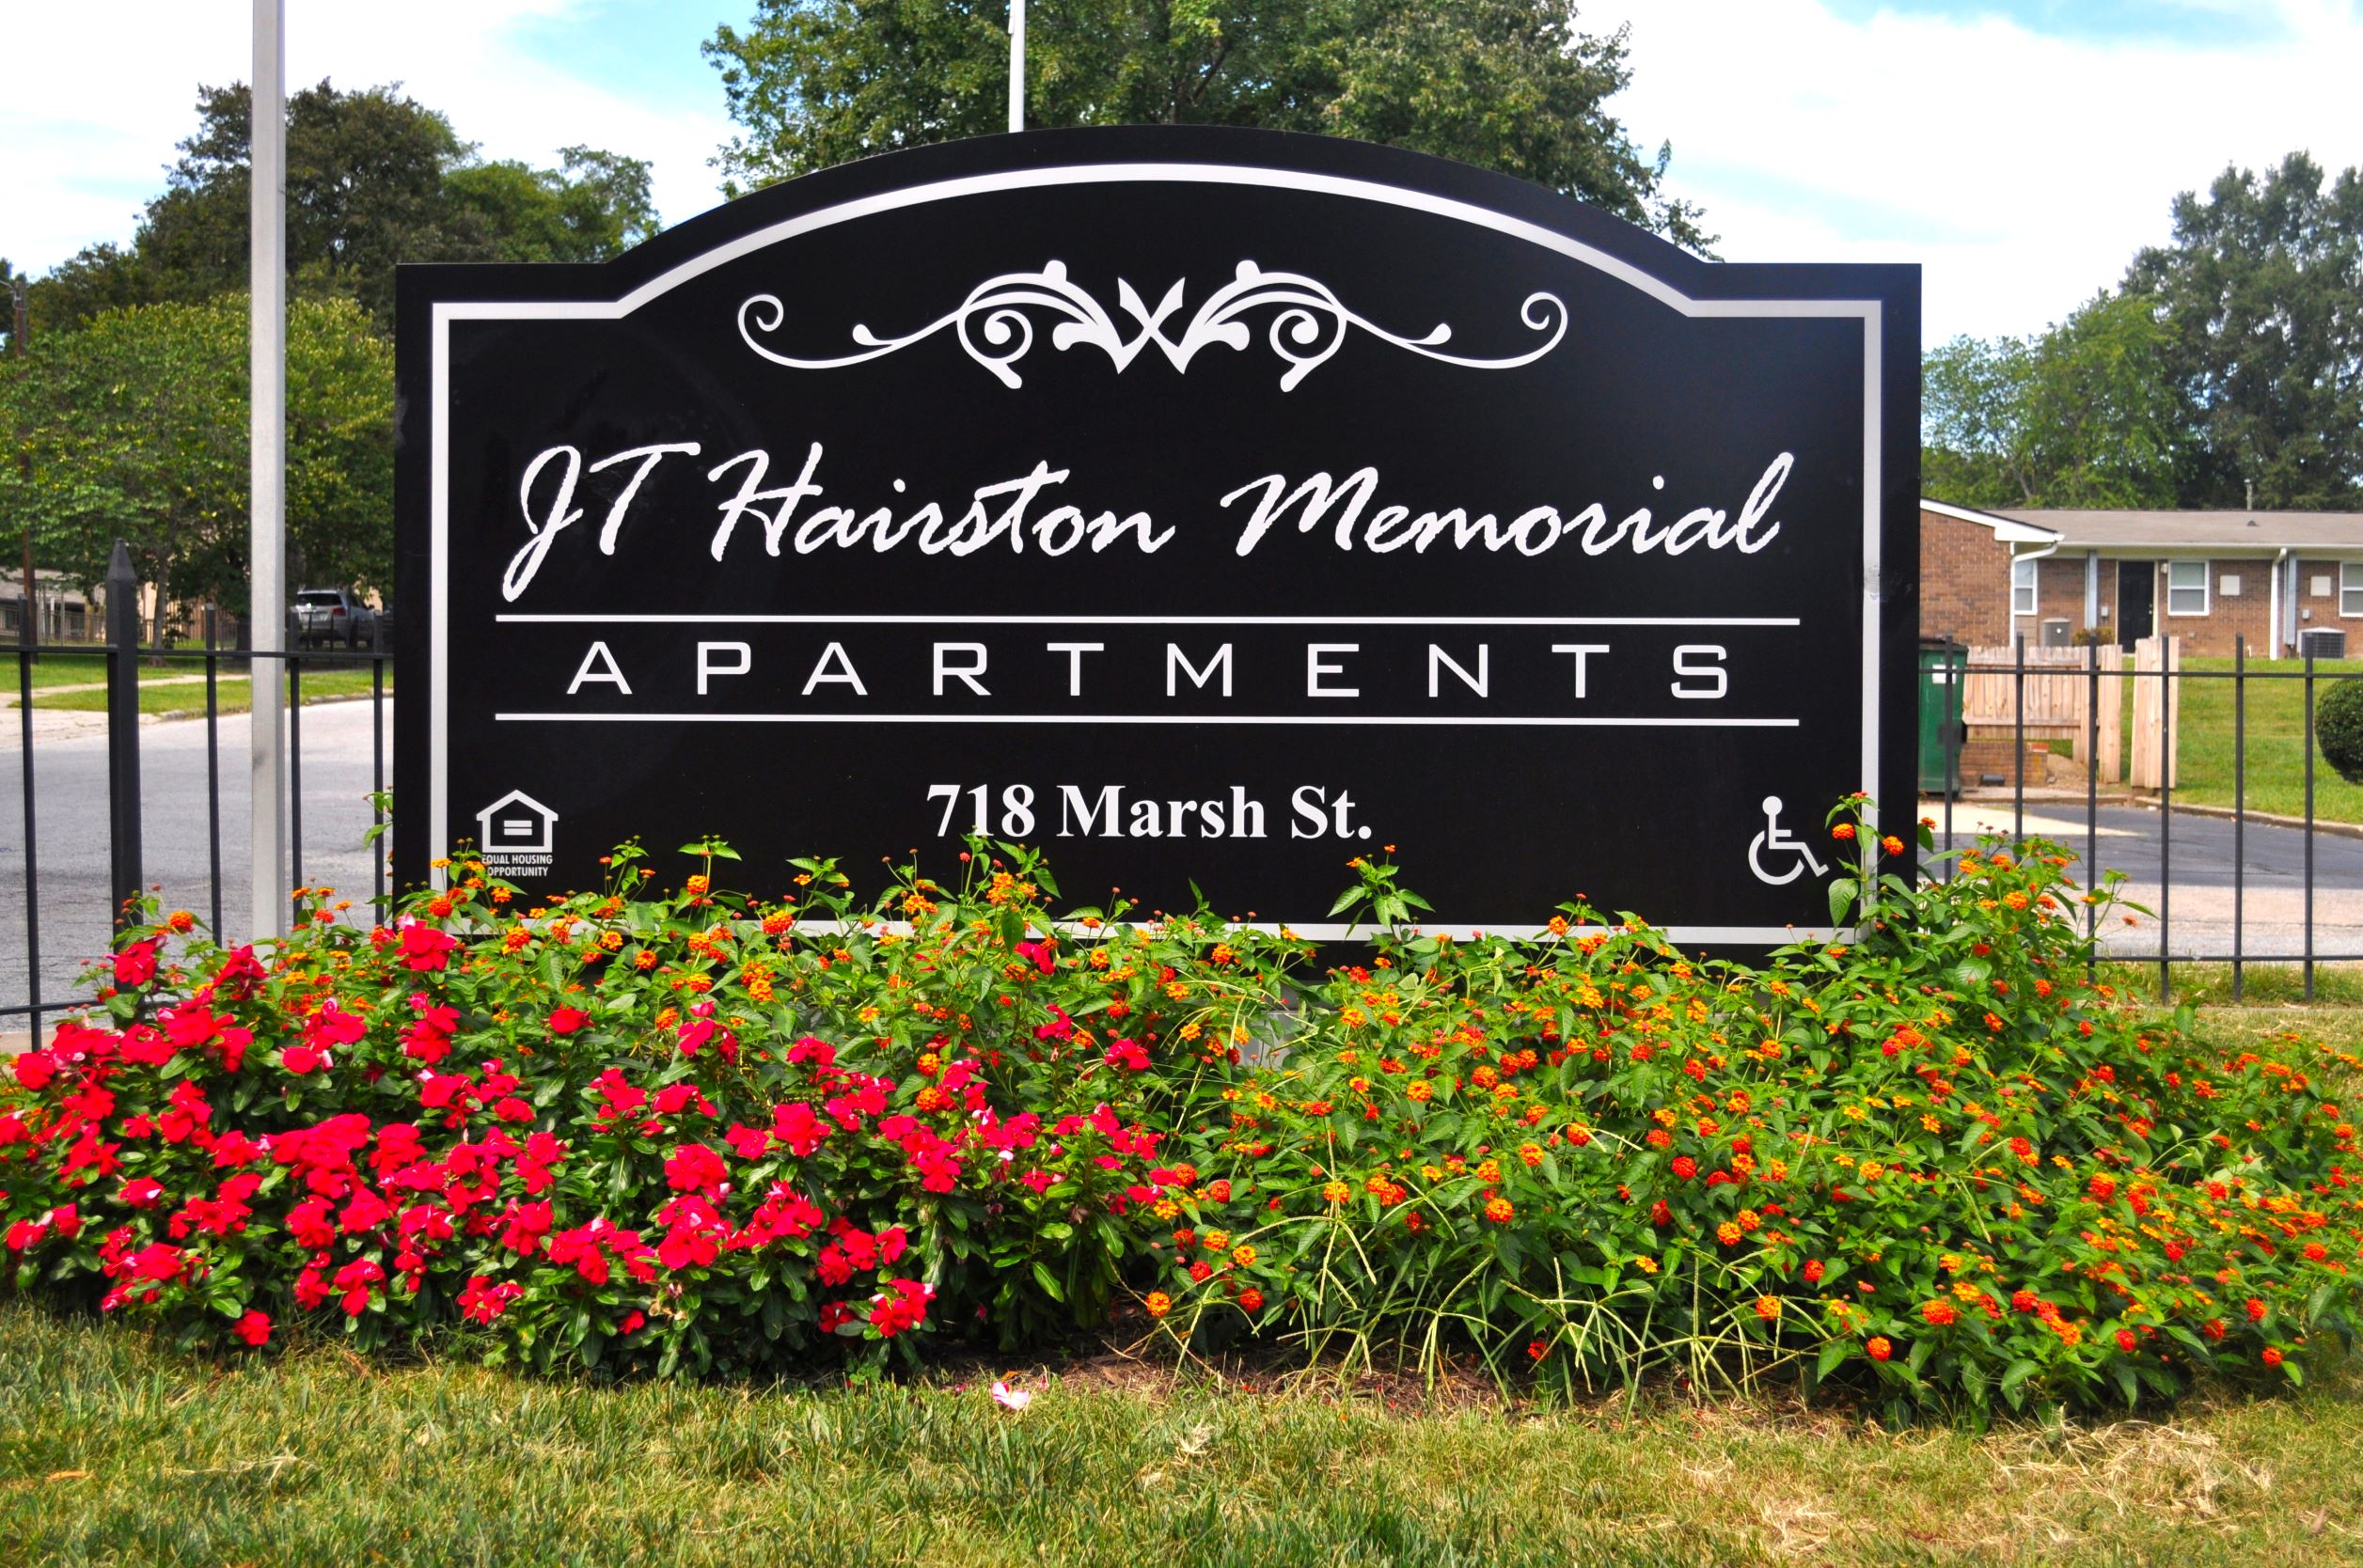 J.T. HAIRSTON MEMORIAL APARTMENTS